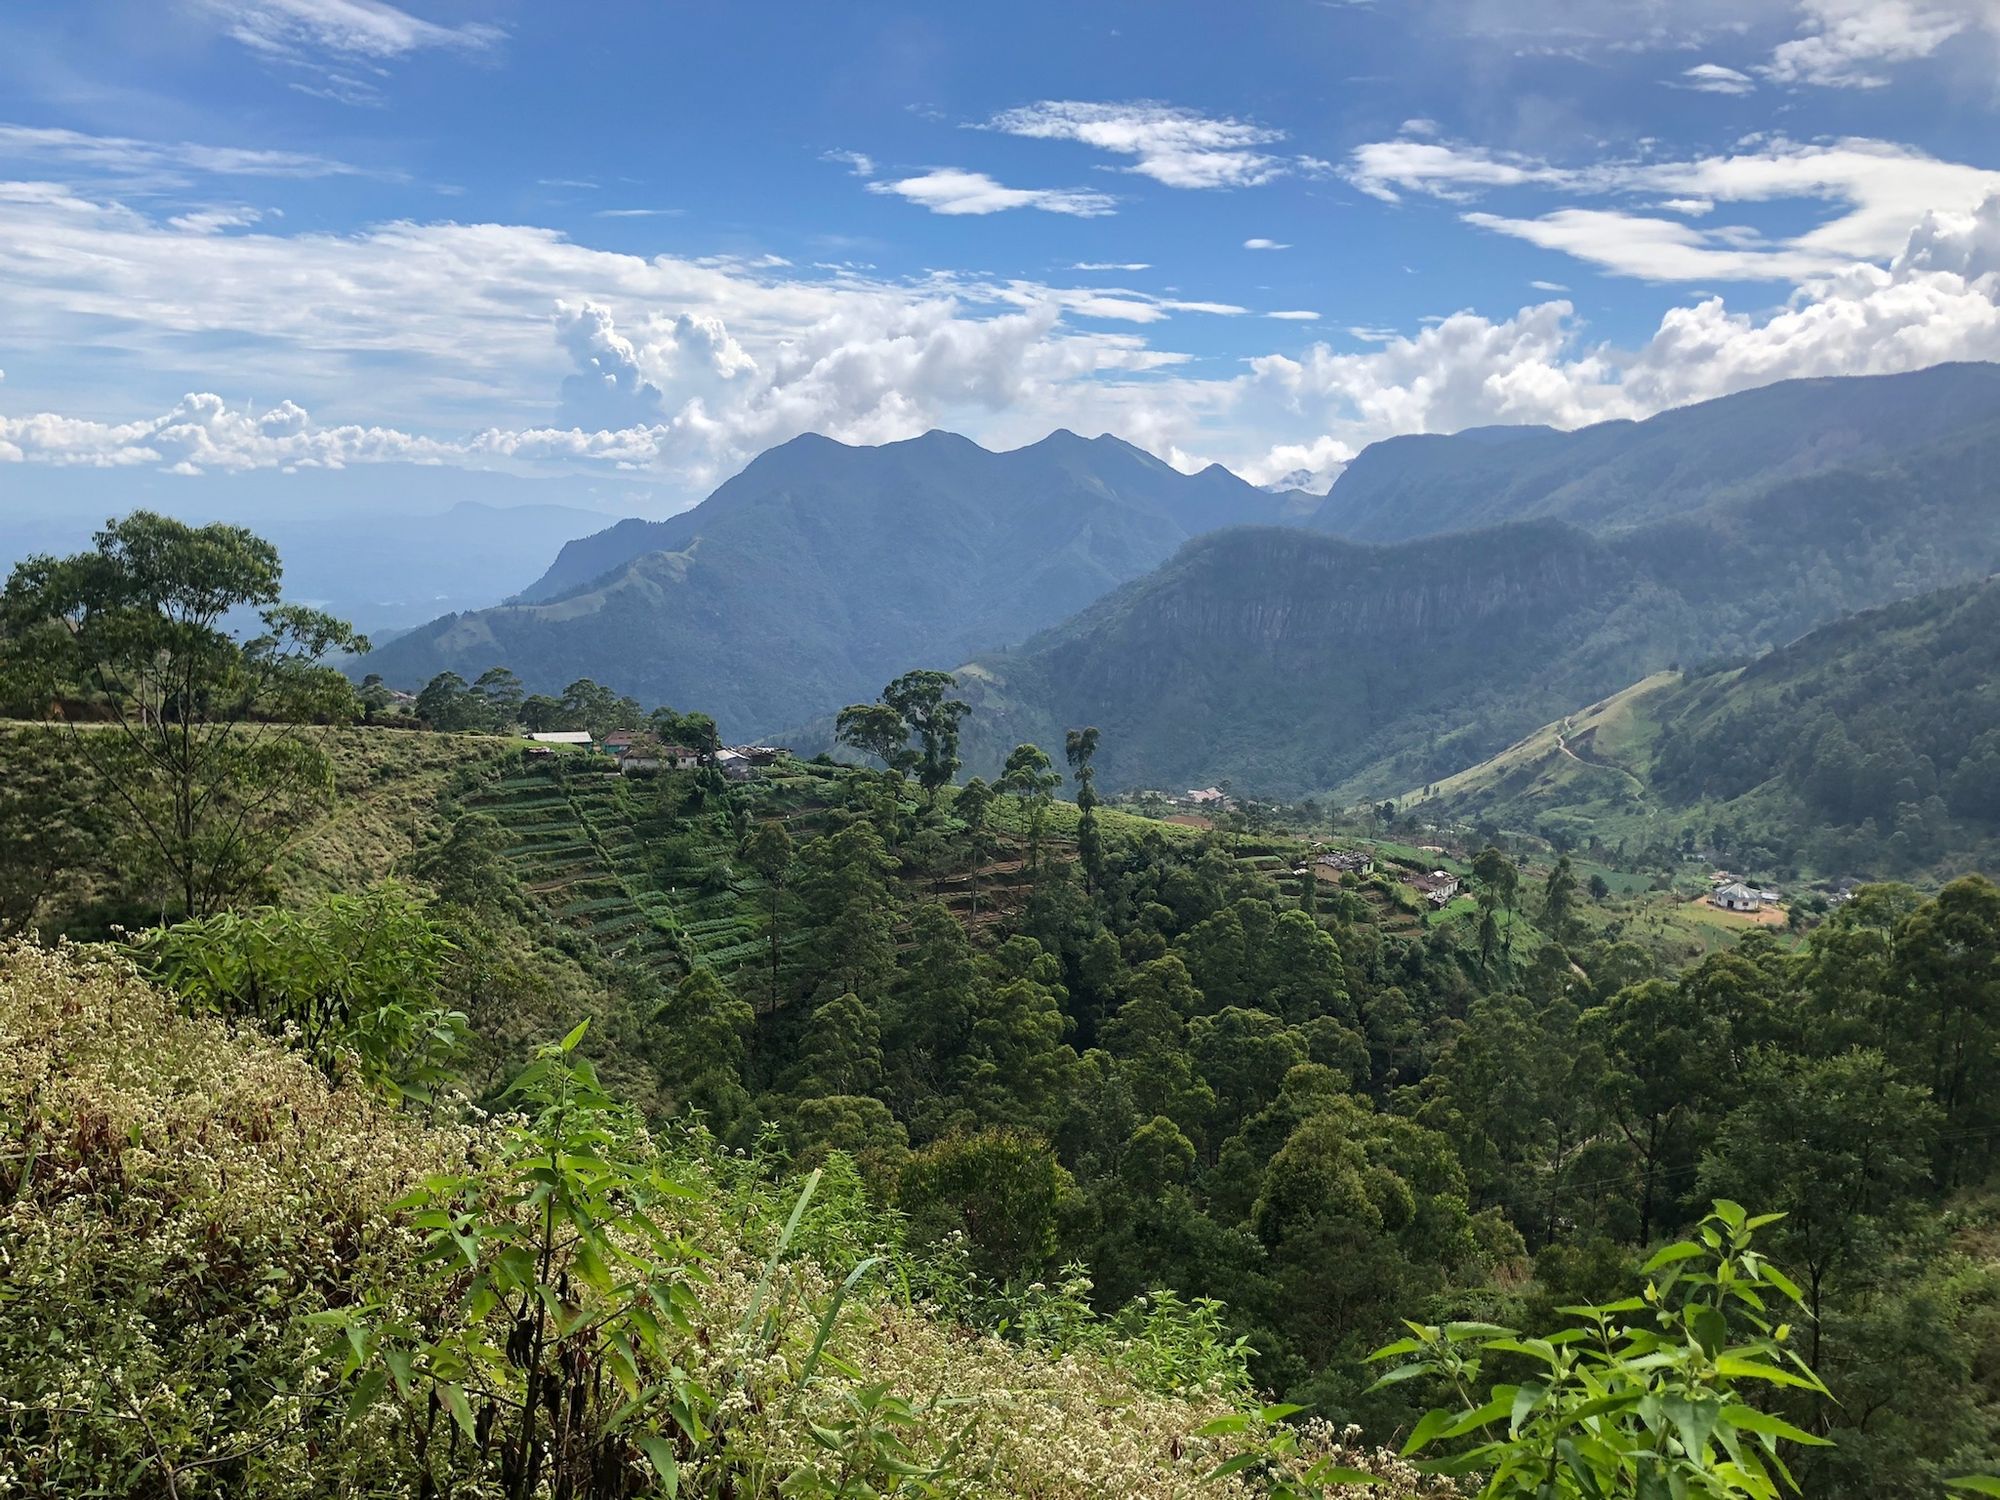 Mountainous views across the tea plantations of Sri Lanka.